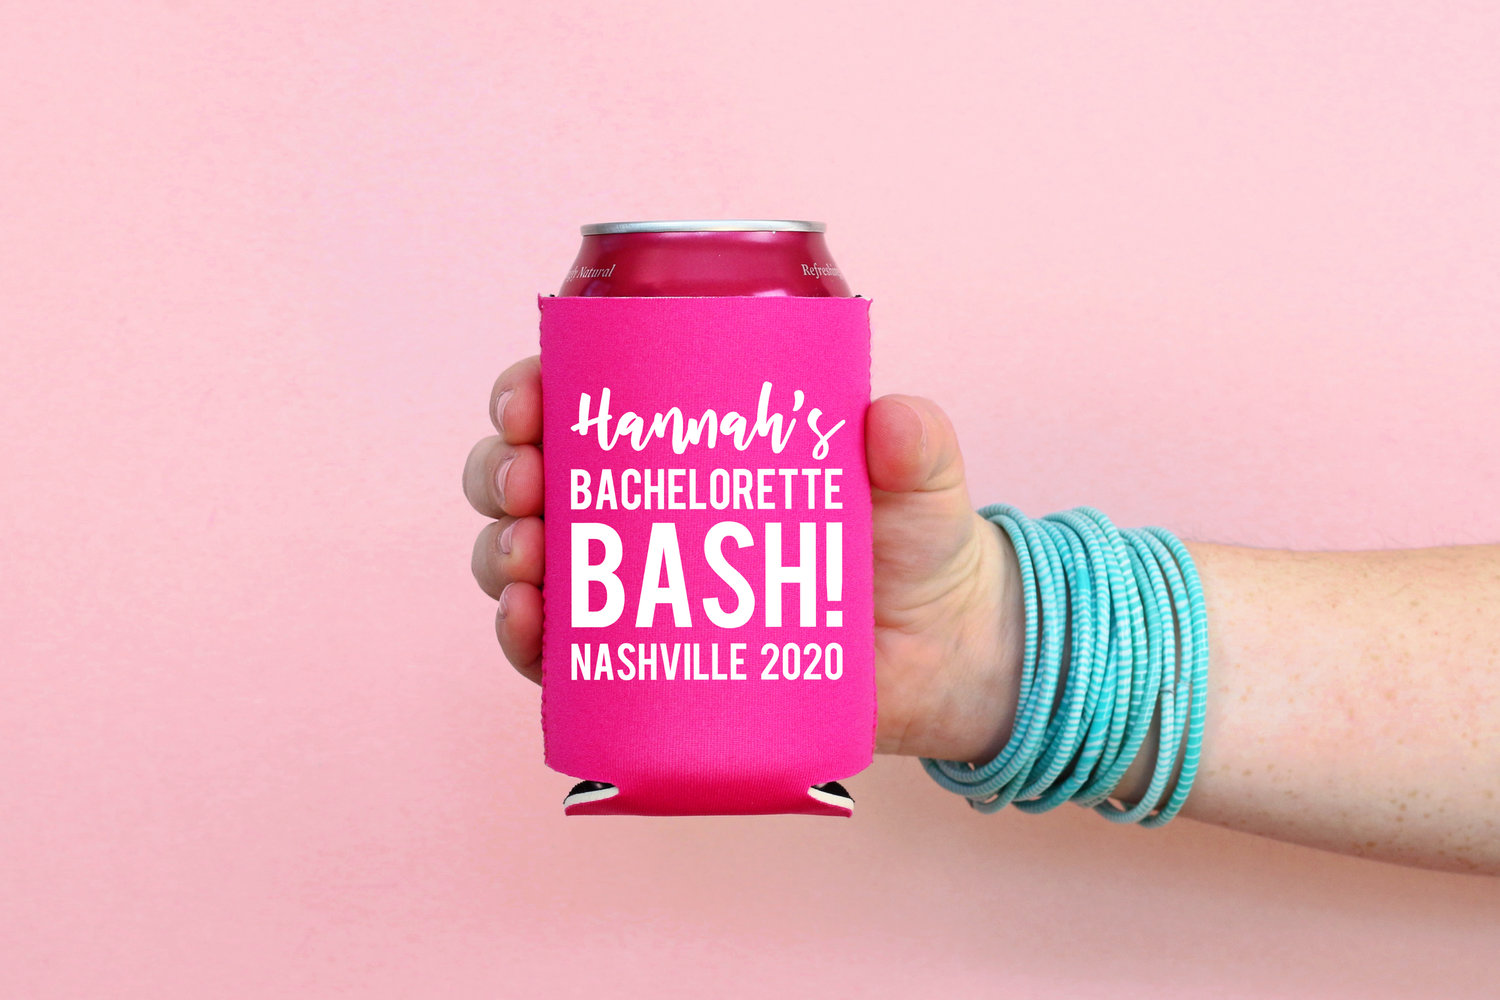 Bachelorette Party Pink Flask - Personalized bachelorette party